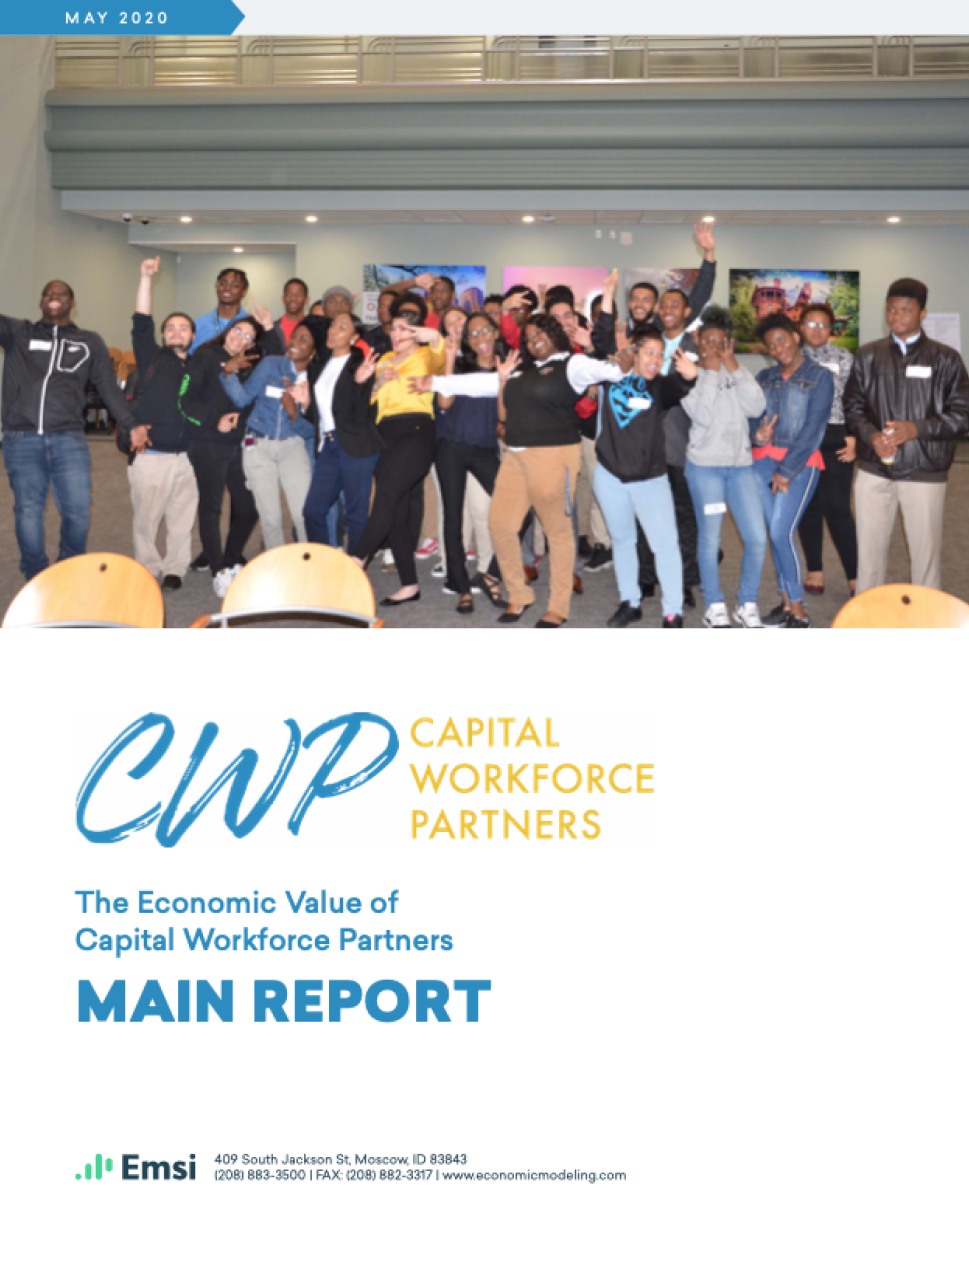 The Economic Value of Capital Workforce Partners mockup